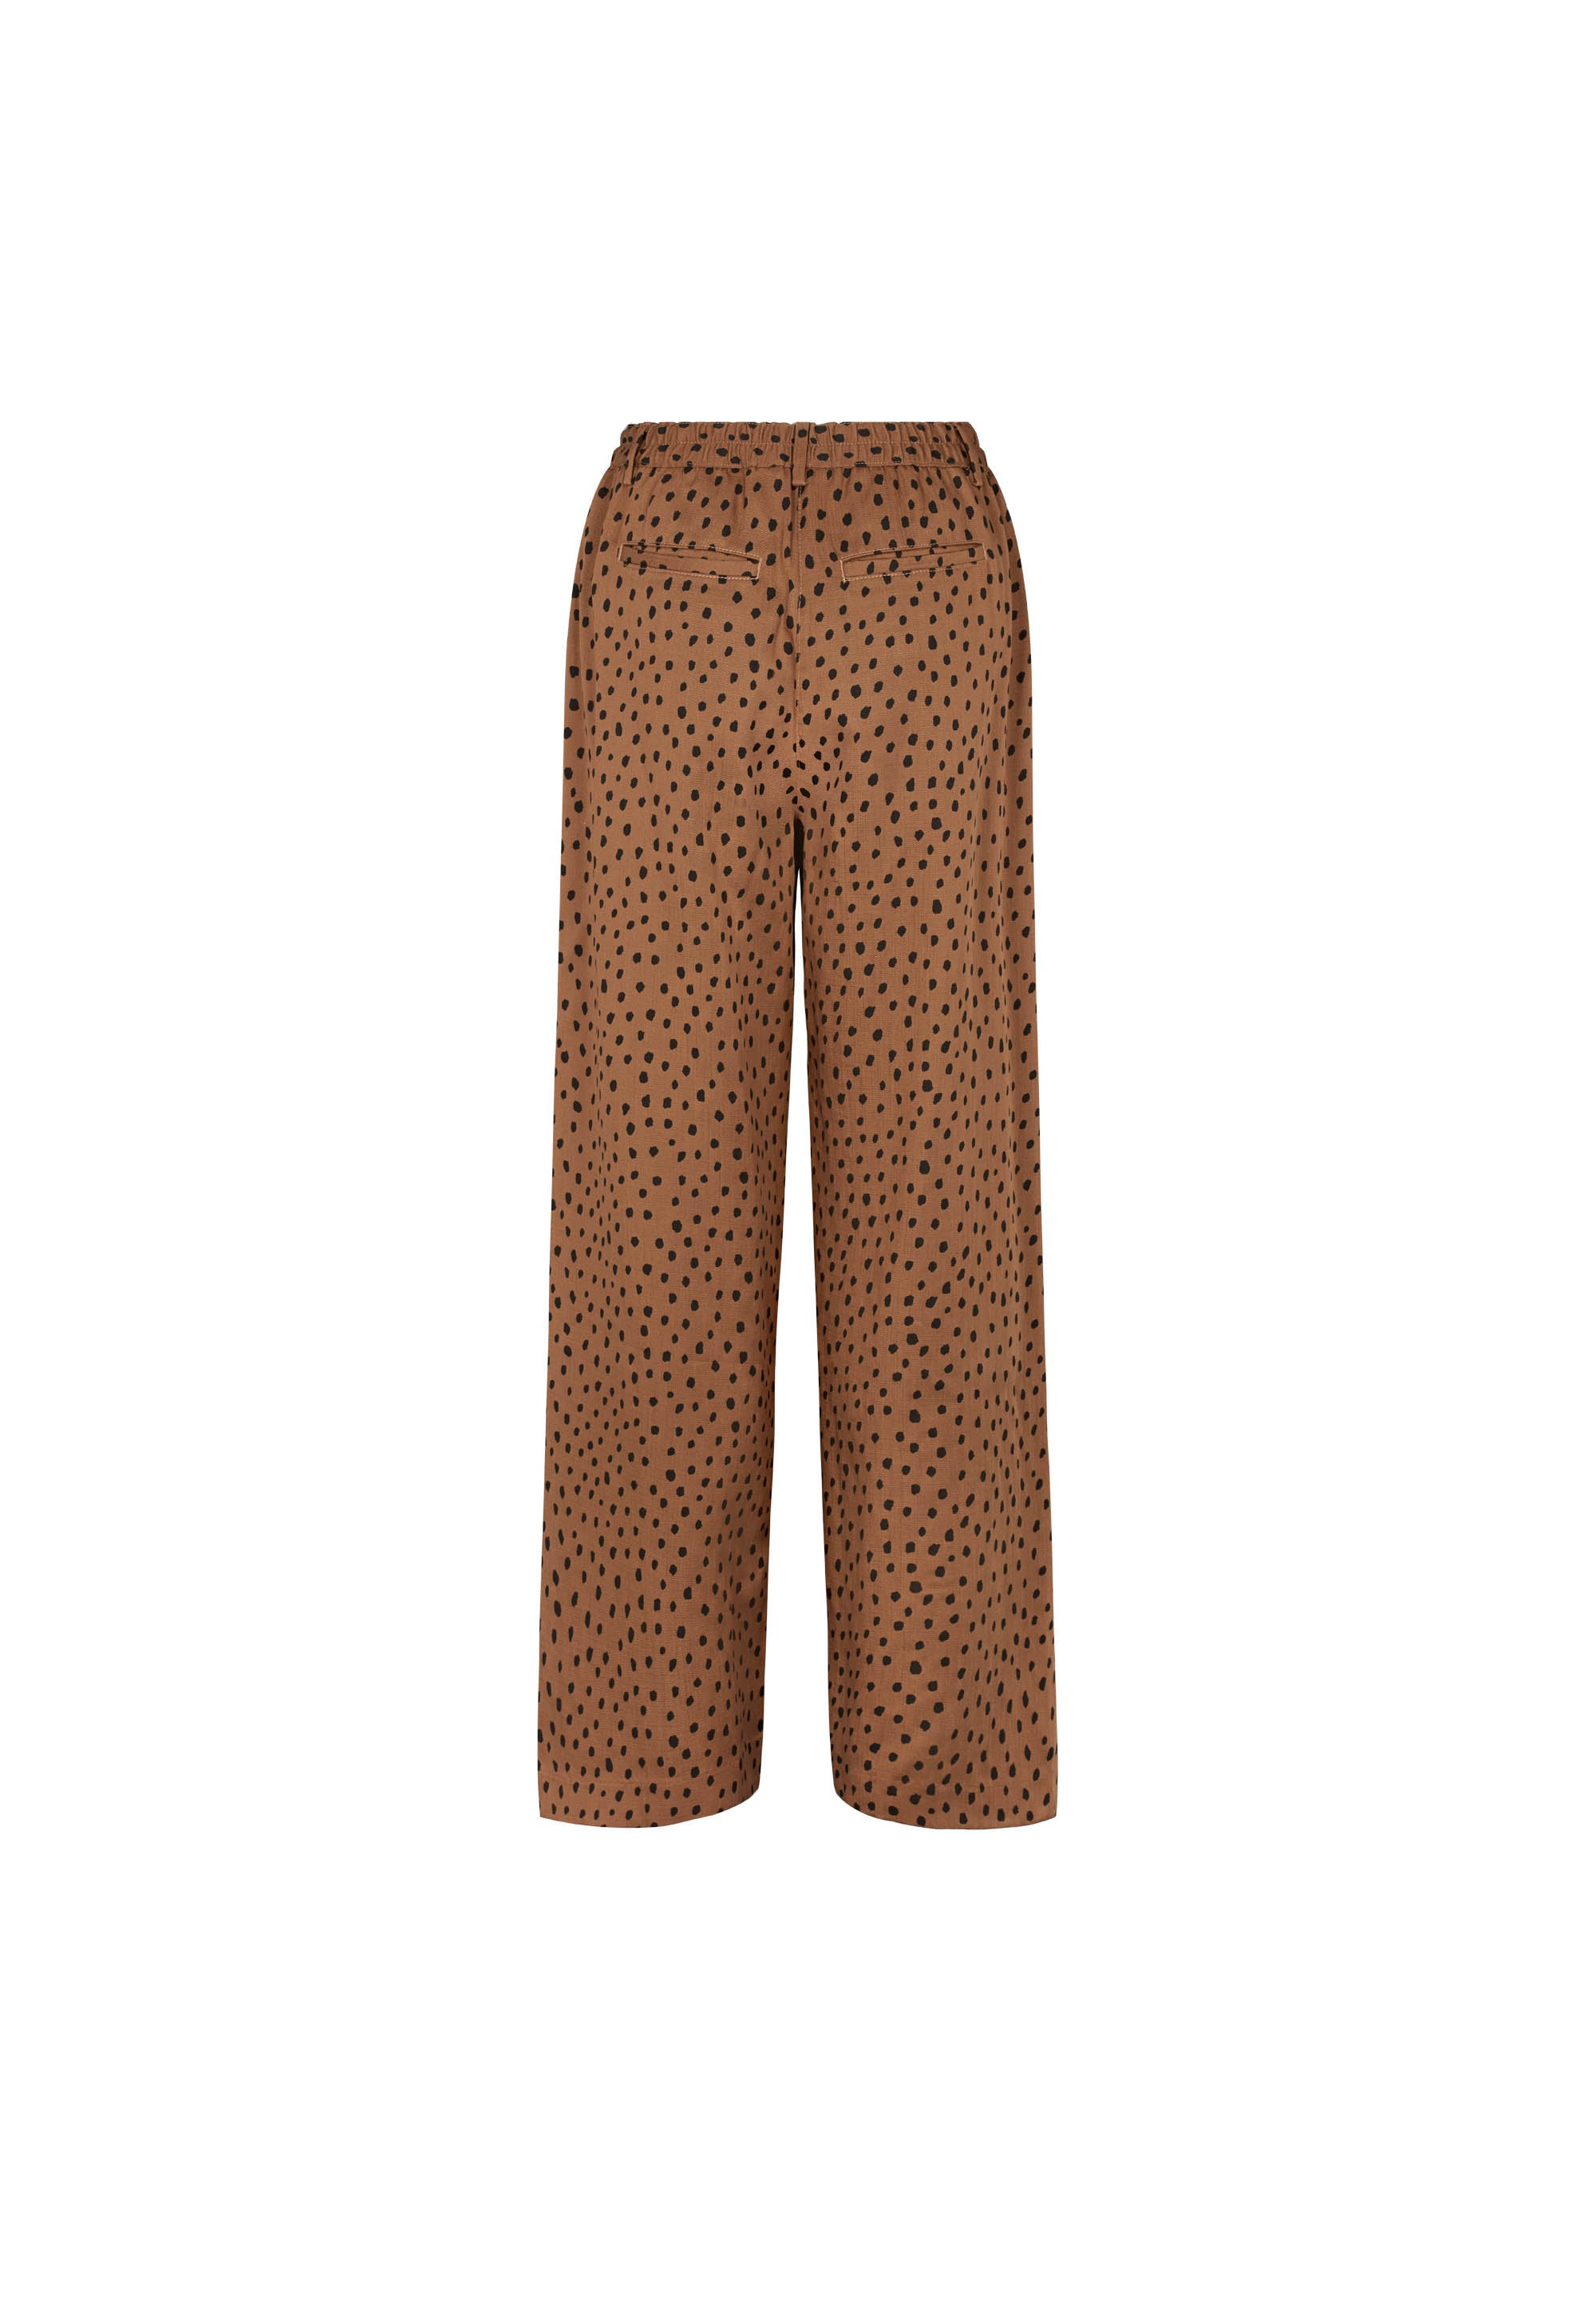 LAURIE Hilde Loose - Medium Length Trousers LOOSE 81010 Camel Print